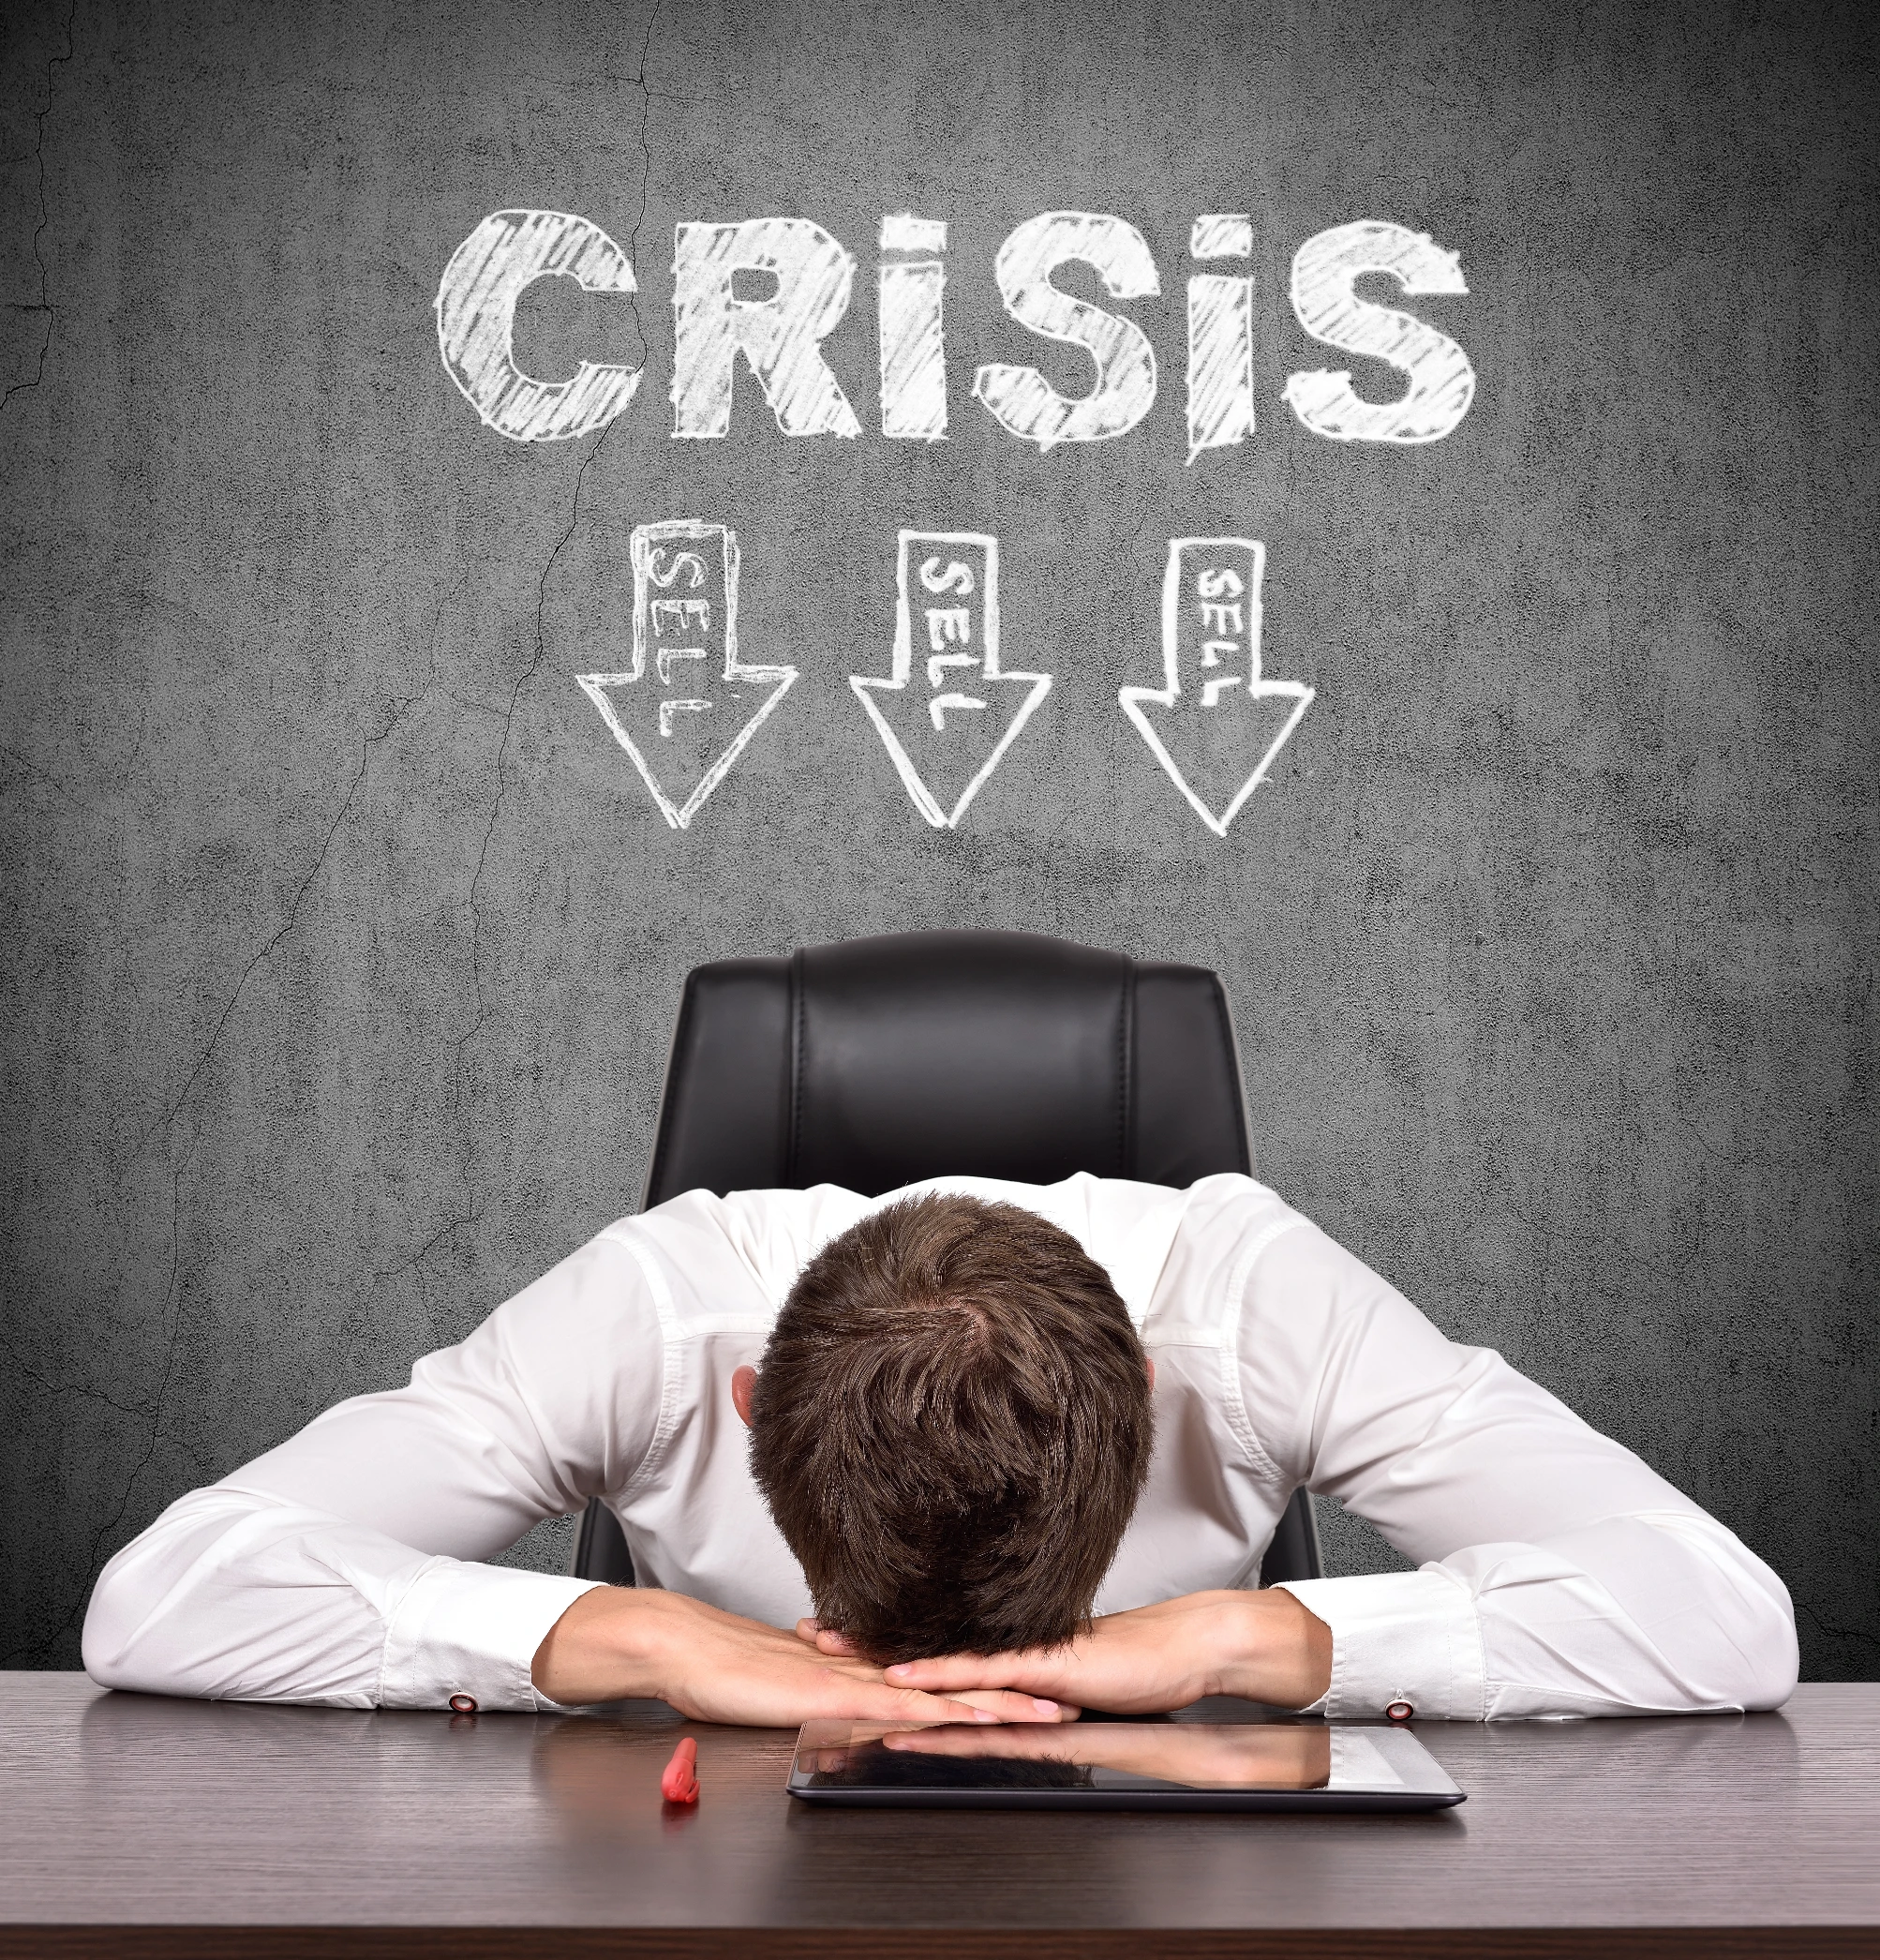 Ineffective Crisis Management